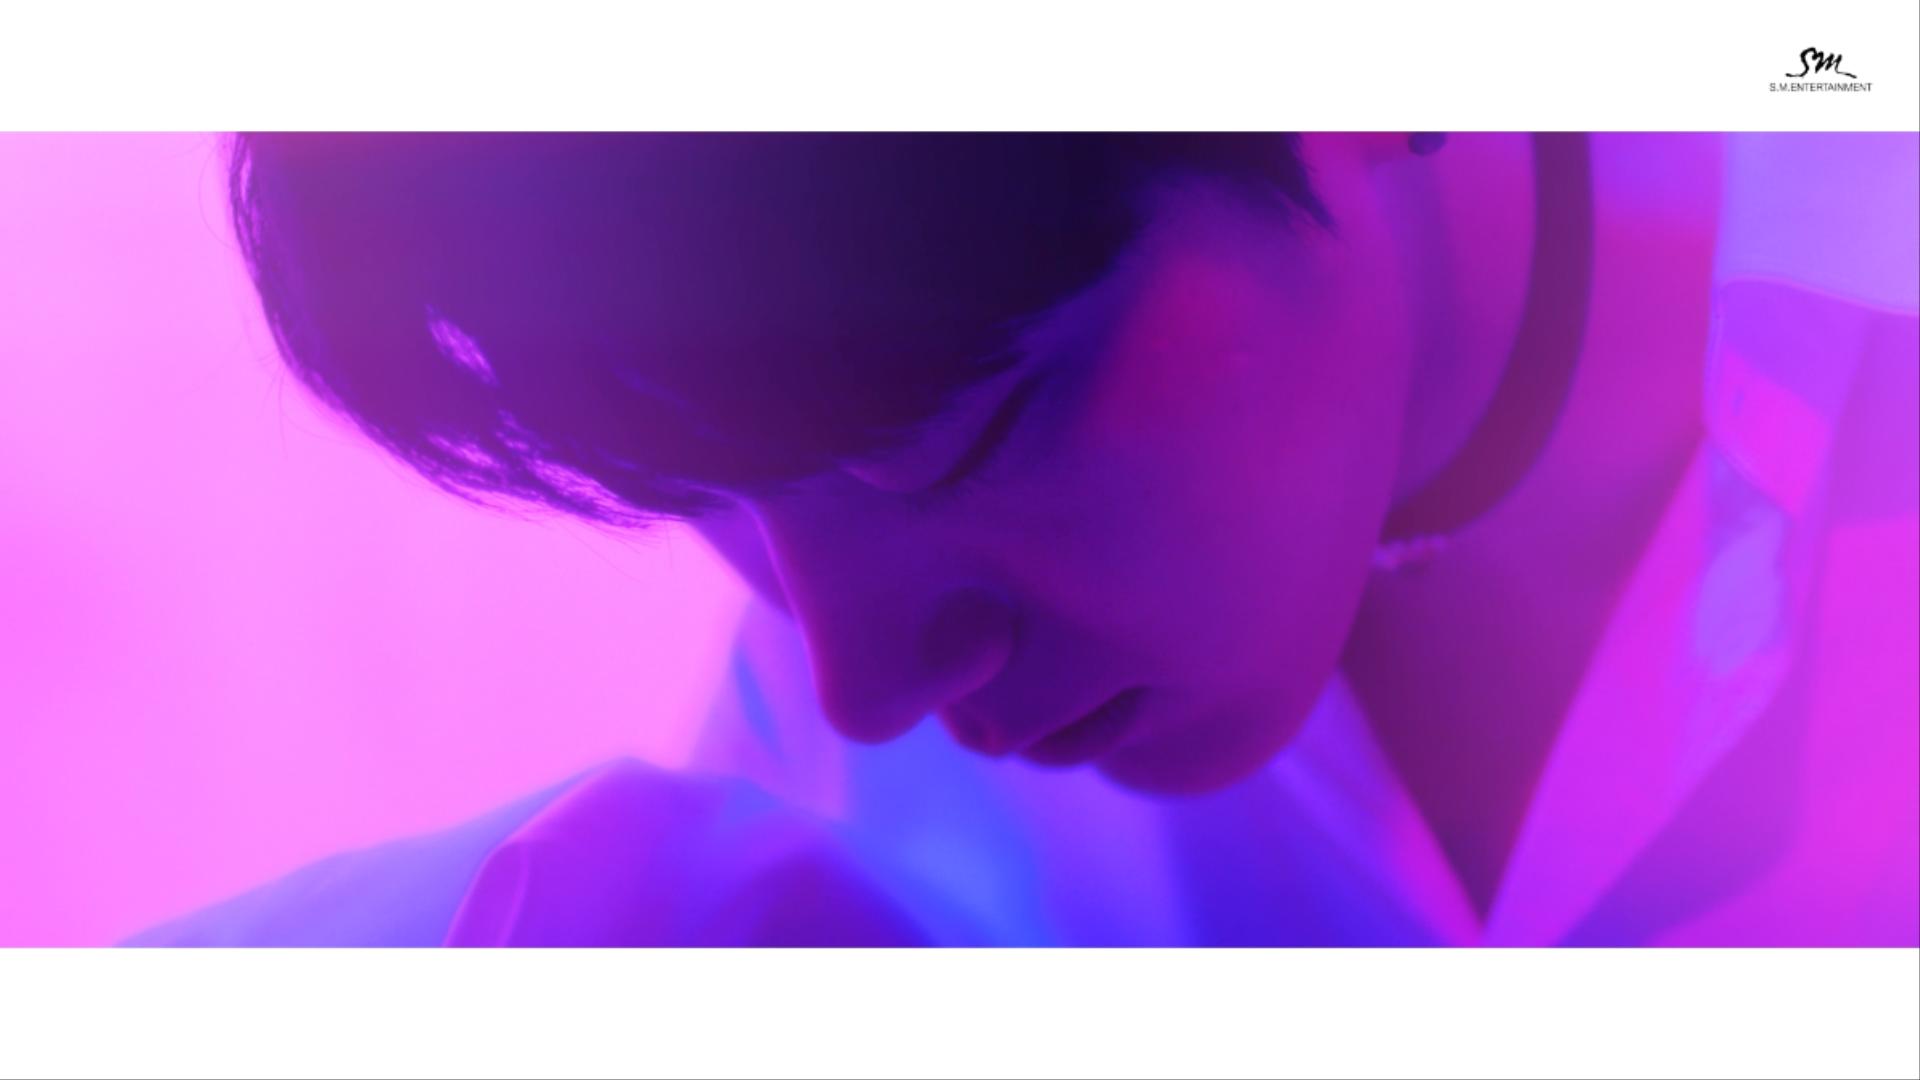 [STATION] TEN 텐_夢中夢 (몽중몽; Dream In A Dream)_Music Video